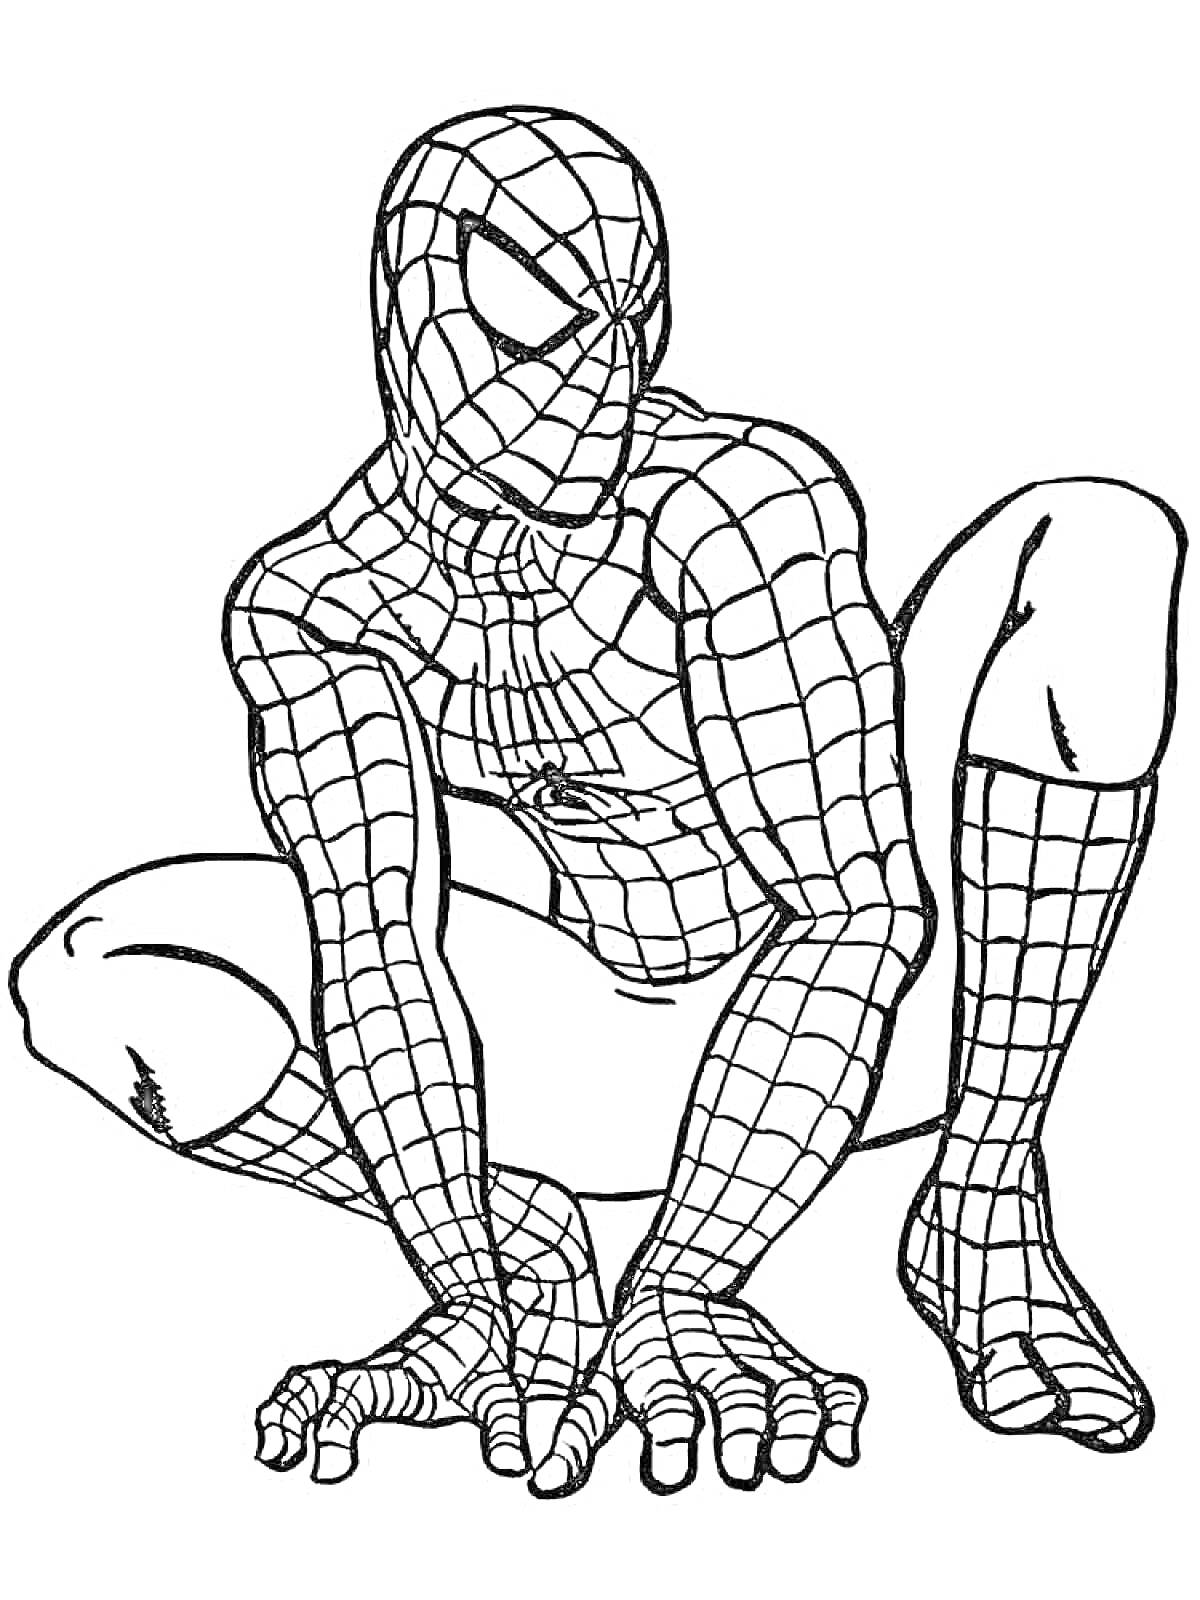 Раскраска Человек-паук в костюме, присев на корточки